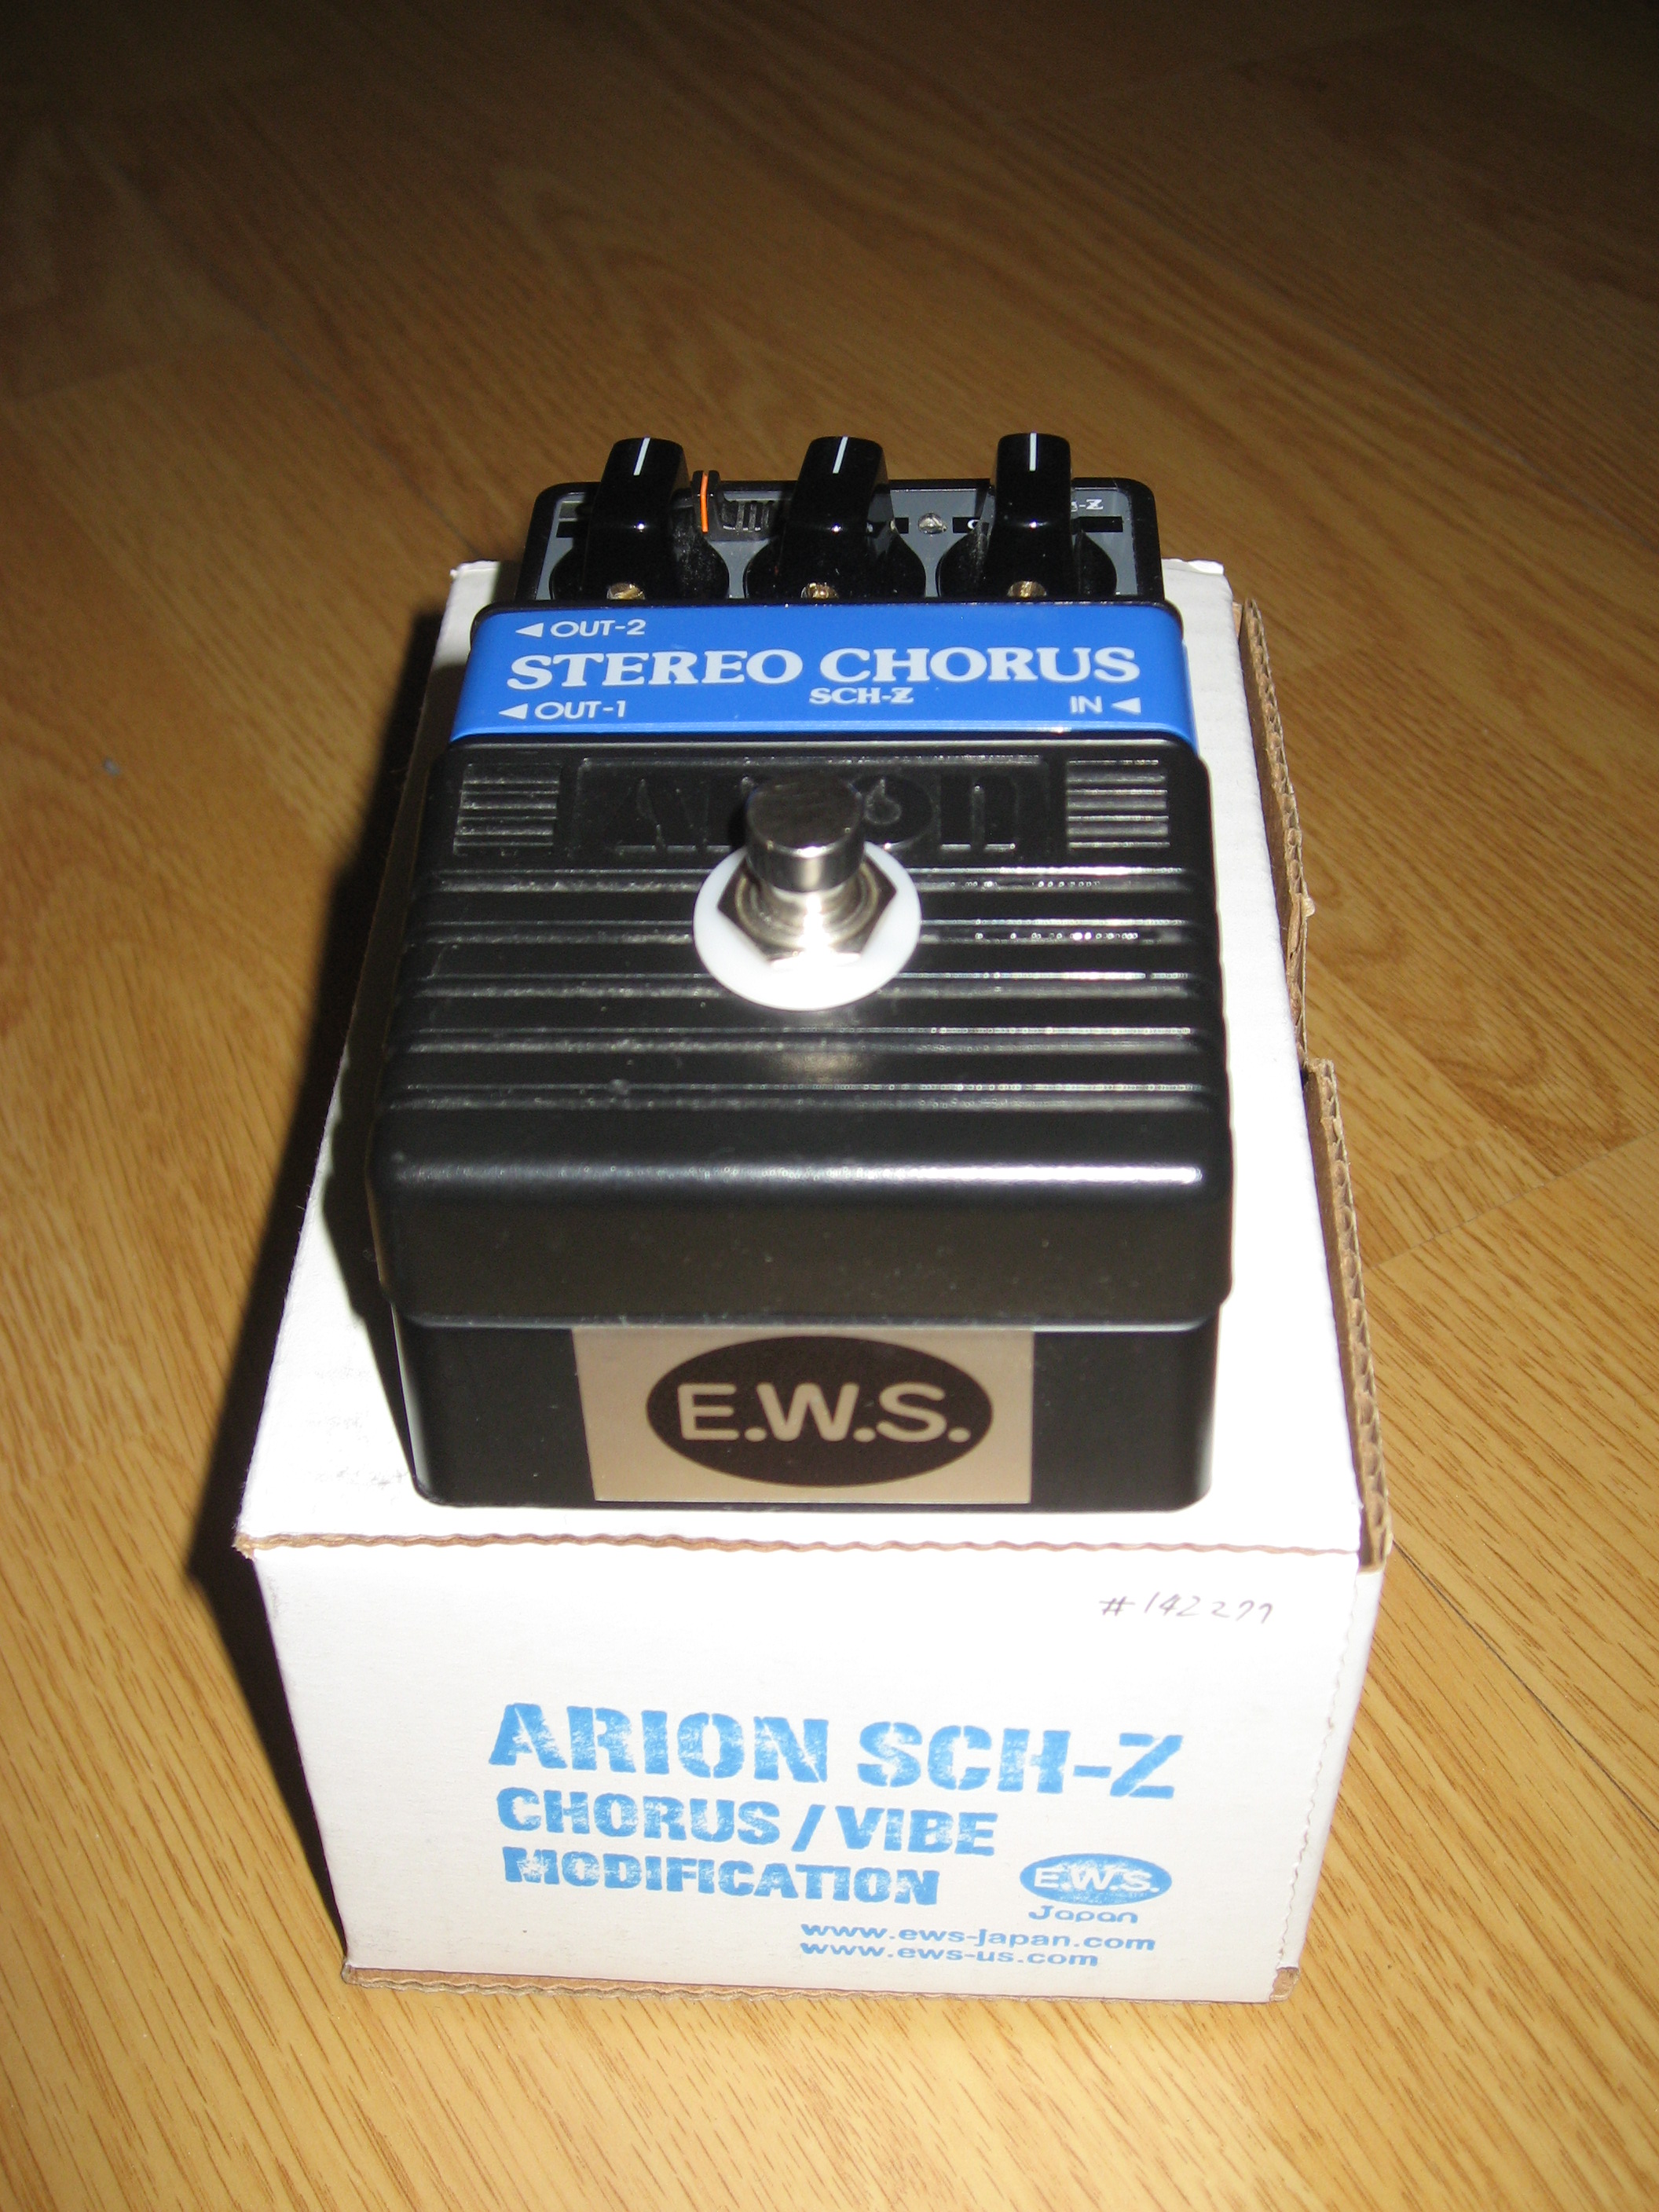 Arion SCH-Z Modded (E.W.S.) image (#1109254) - Audiofanzine